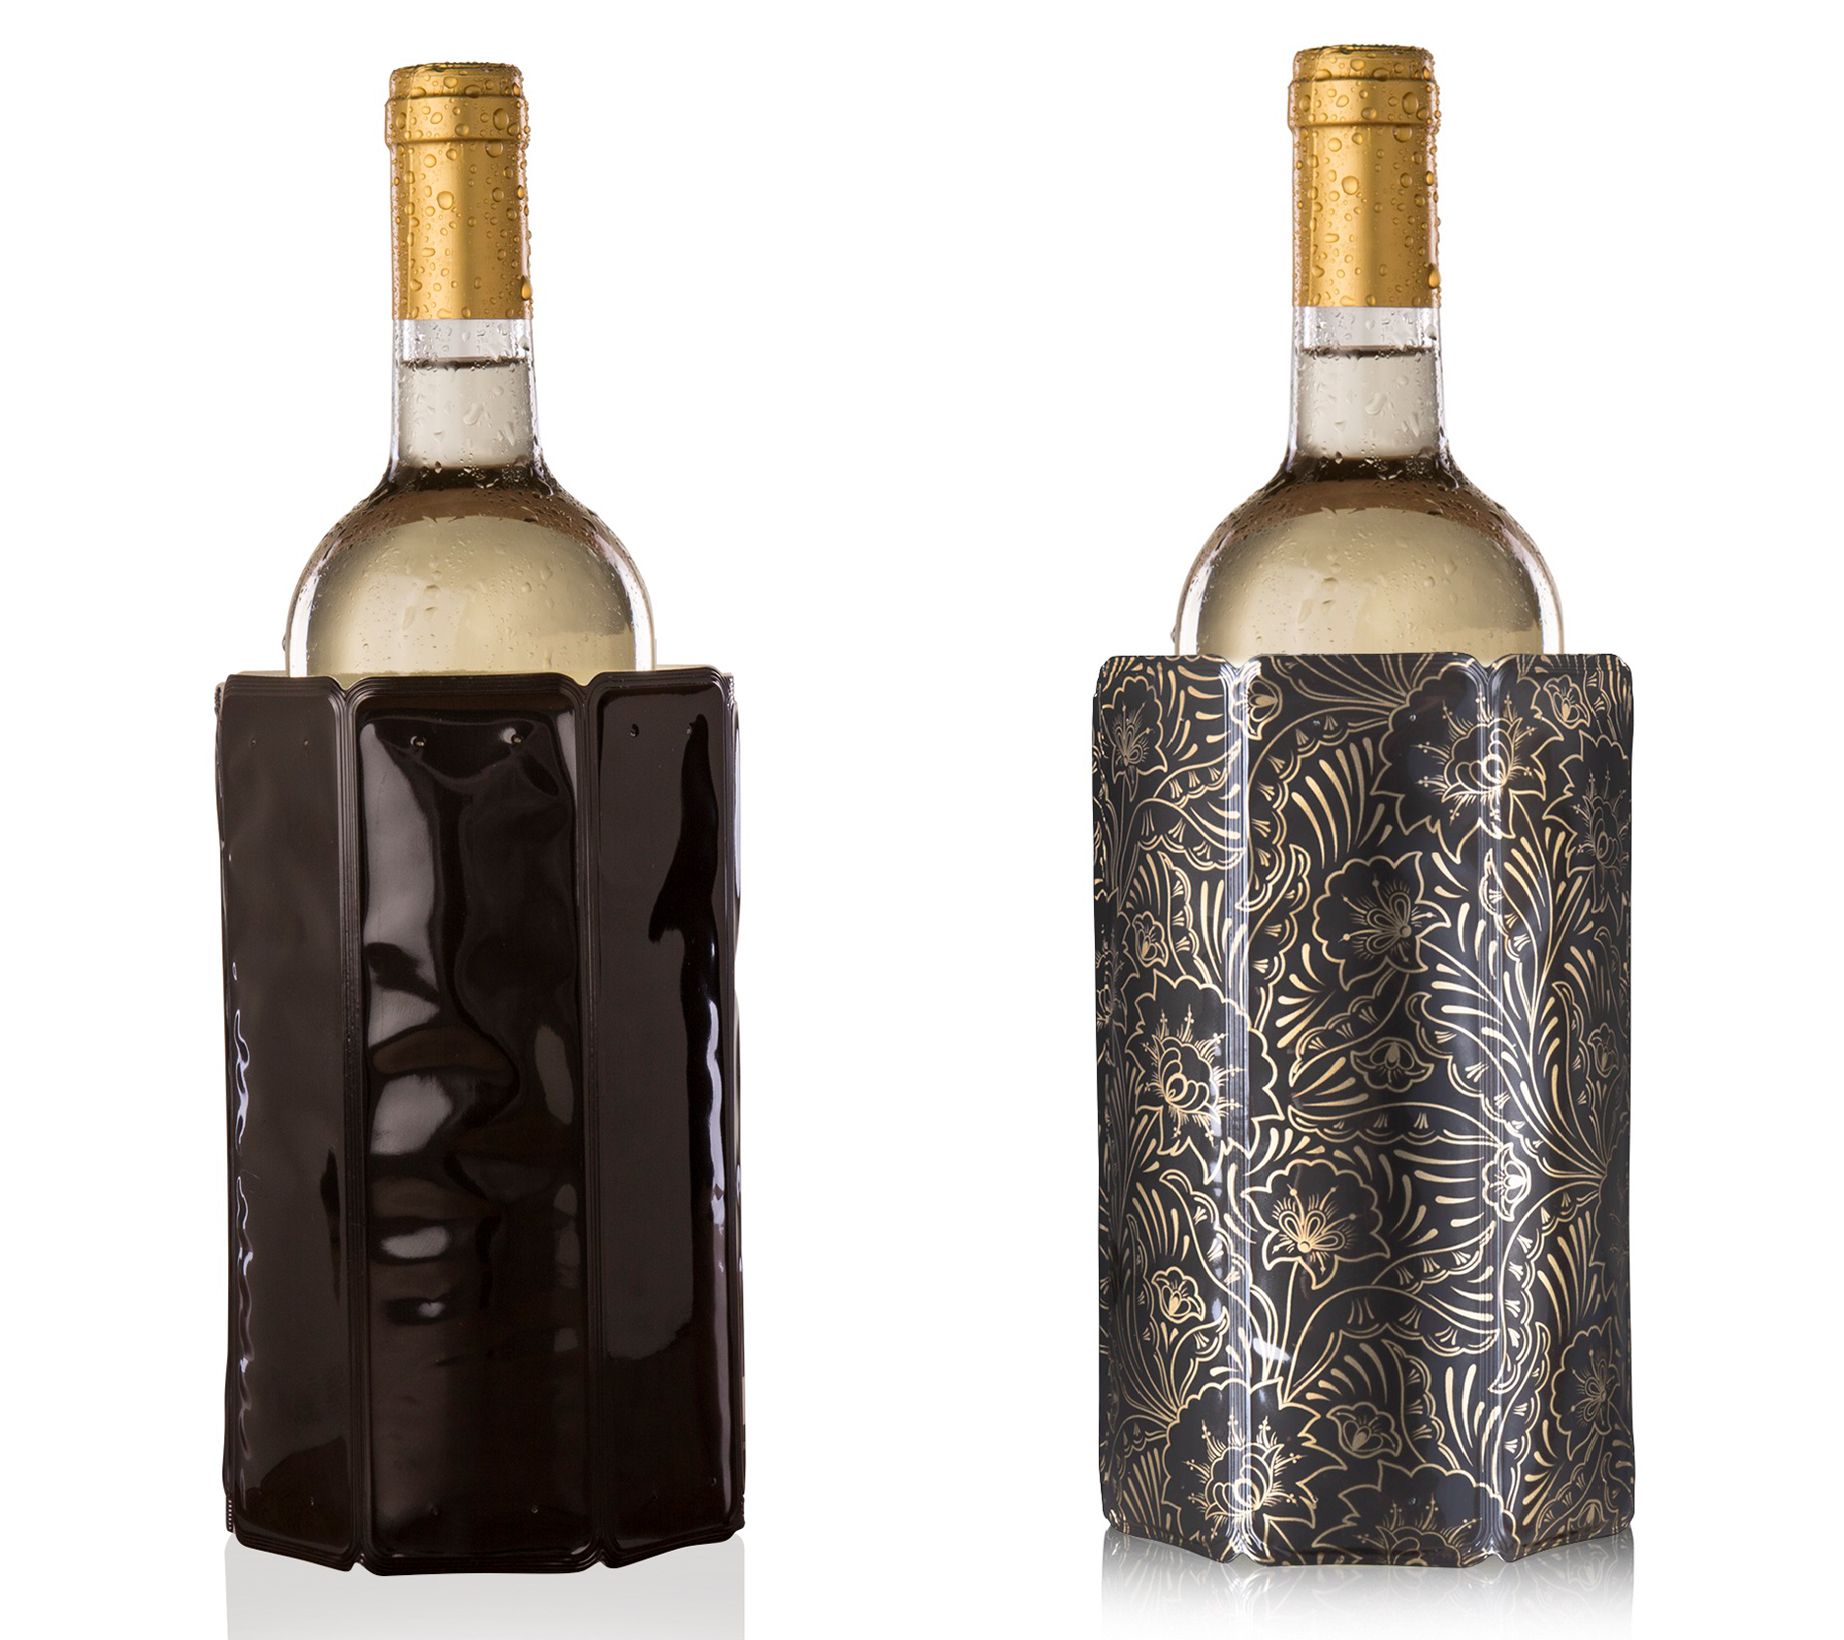 Viski Convex Double Walled Stainless Steel Wine Bottle Chiller